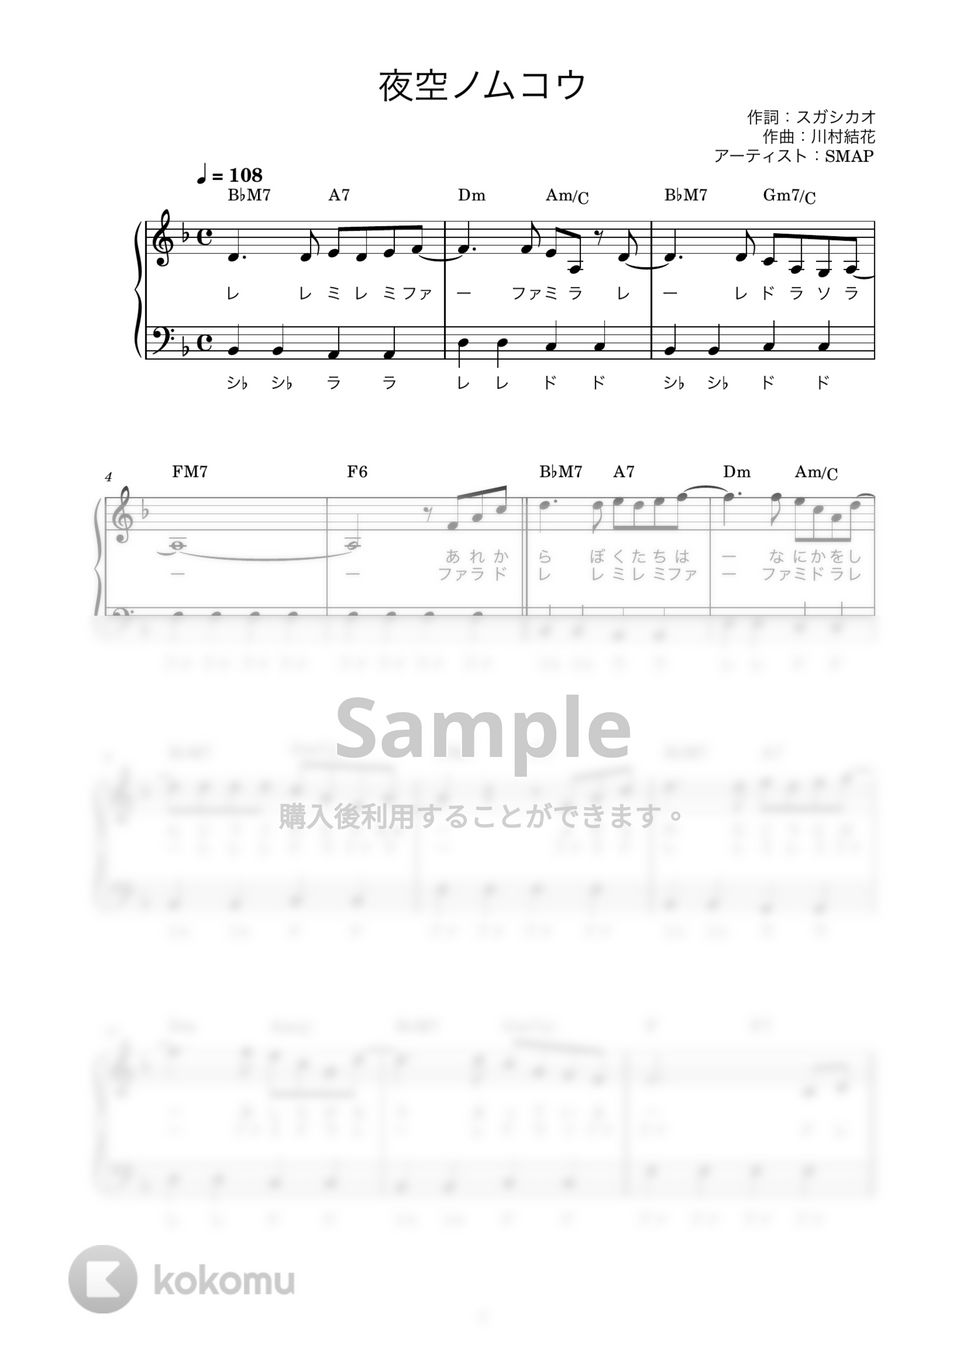 SMAP - 夜空ノムコウ (かんたん / 歌詞付き / ドレミ付き / 初心者) by piano.tokyo